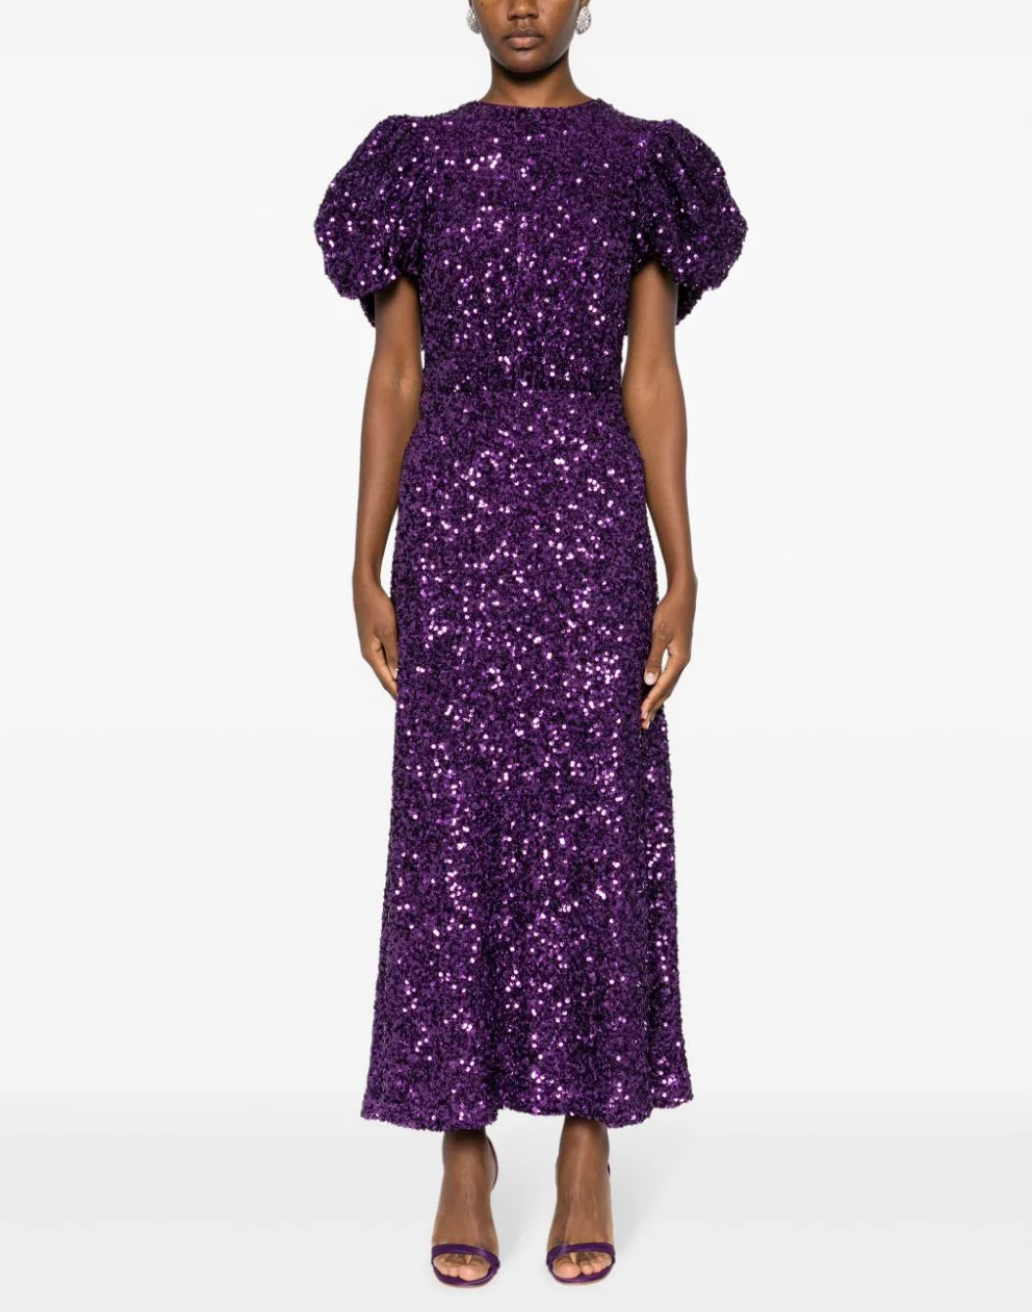 Brynn Whitfield's Purple Sequin Puff Sleeve Dress